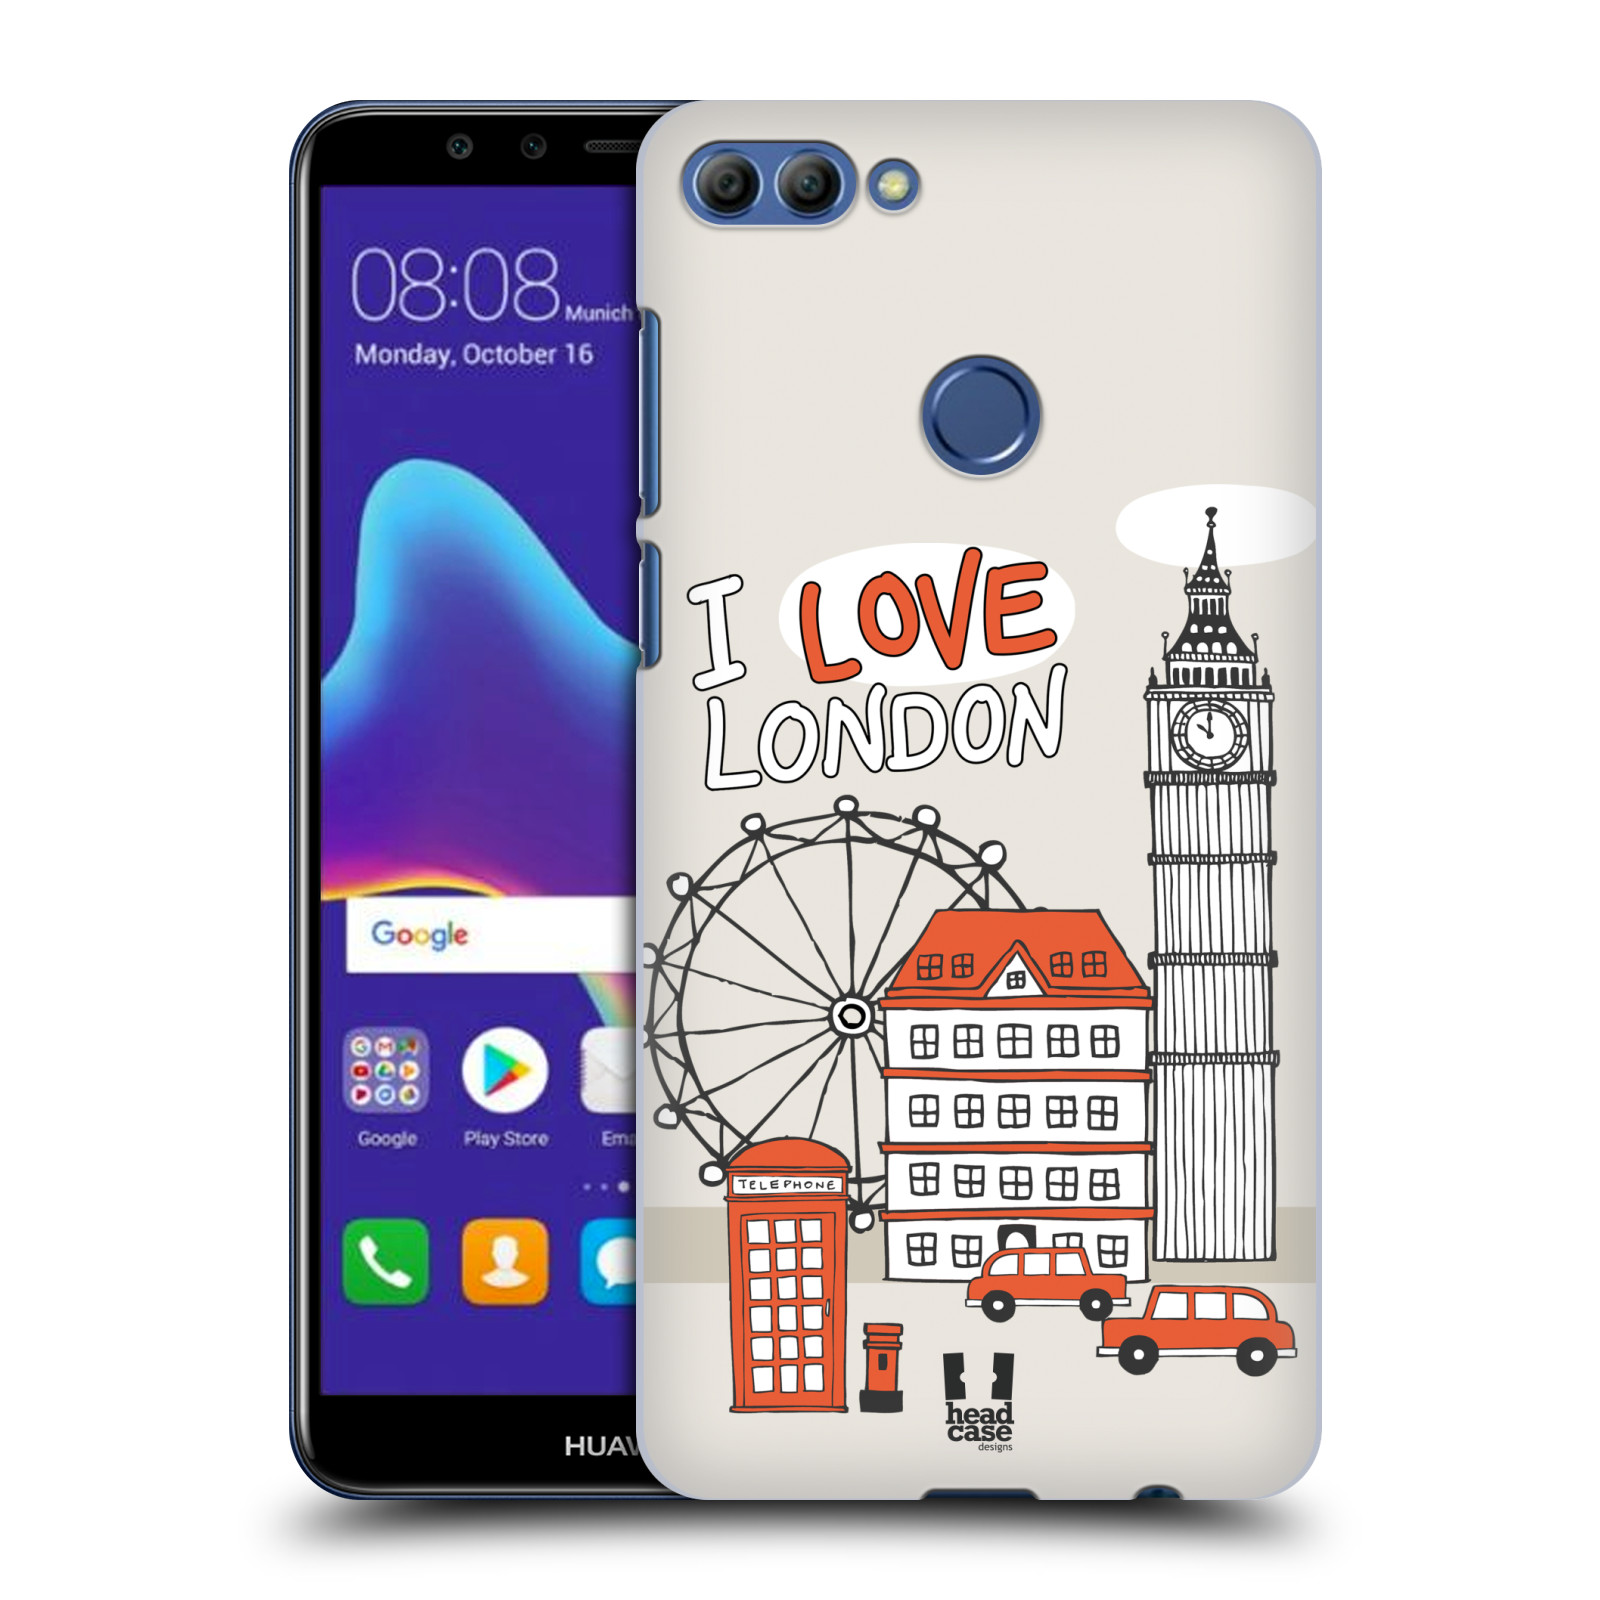 HEAD CASE plastový obal na mobil Huawei Y9 2018 vzor Kreslená městečka ČERVENÁ, Anglie, Londýn, I LOVE LONDON